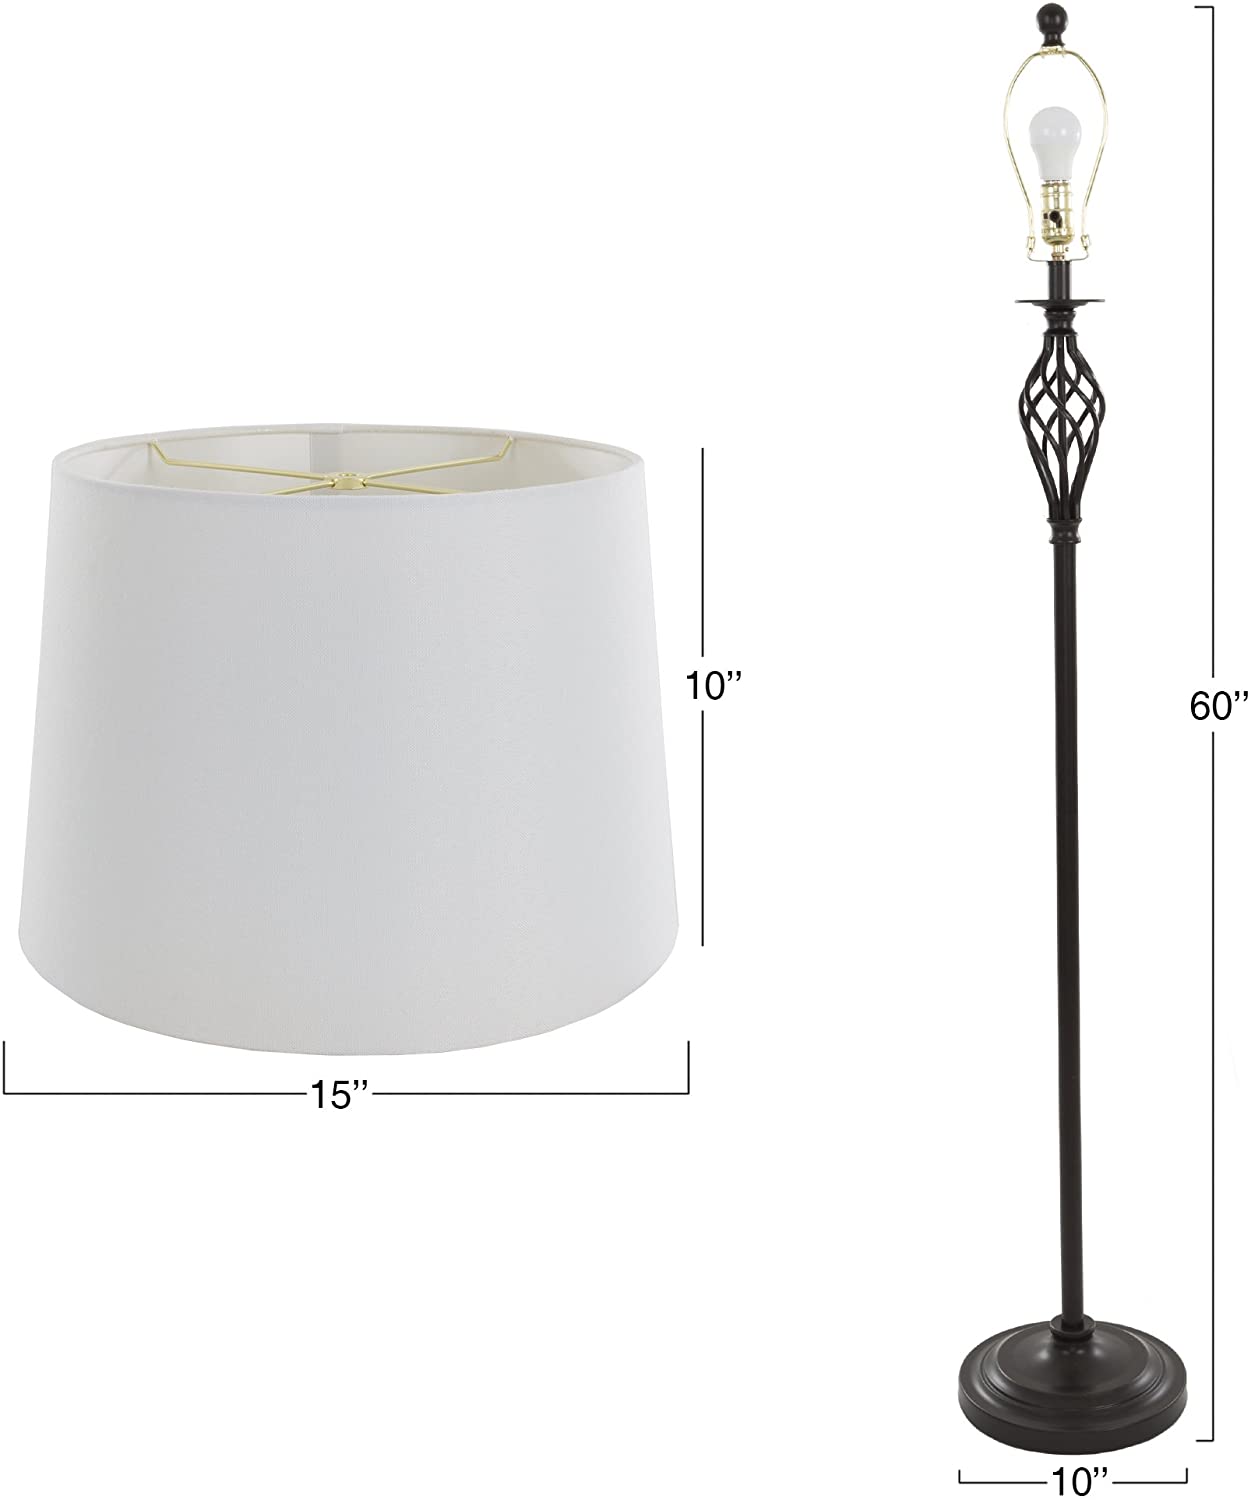 Spiral Cage Design lampsets 3 Lamps Buy - Best Online Lighting Stores